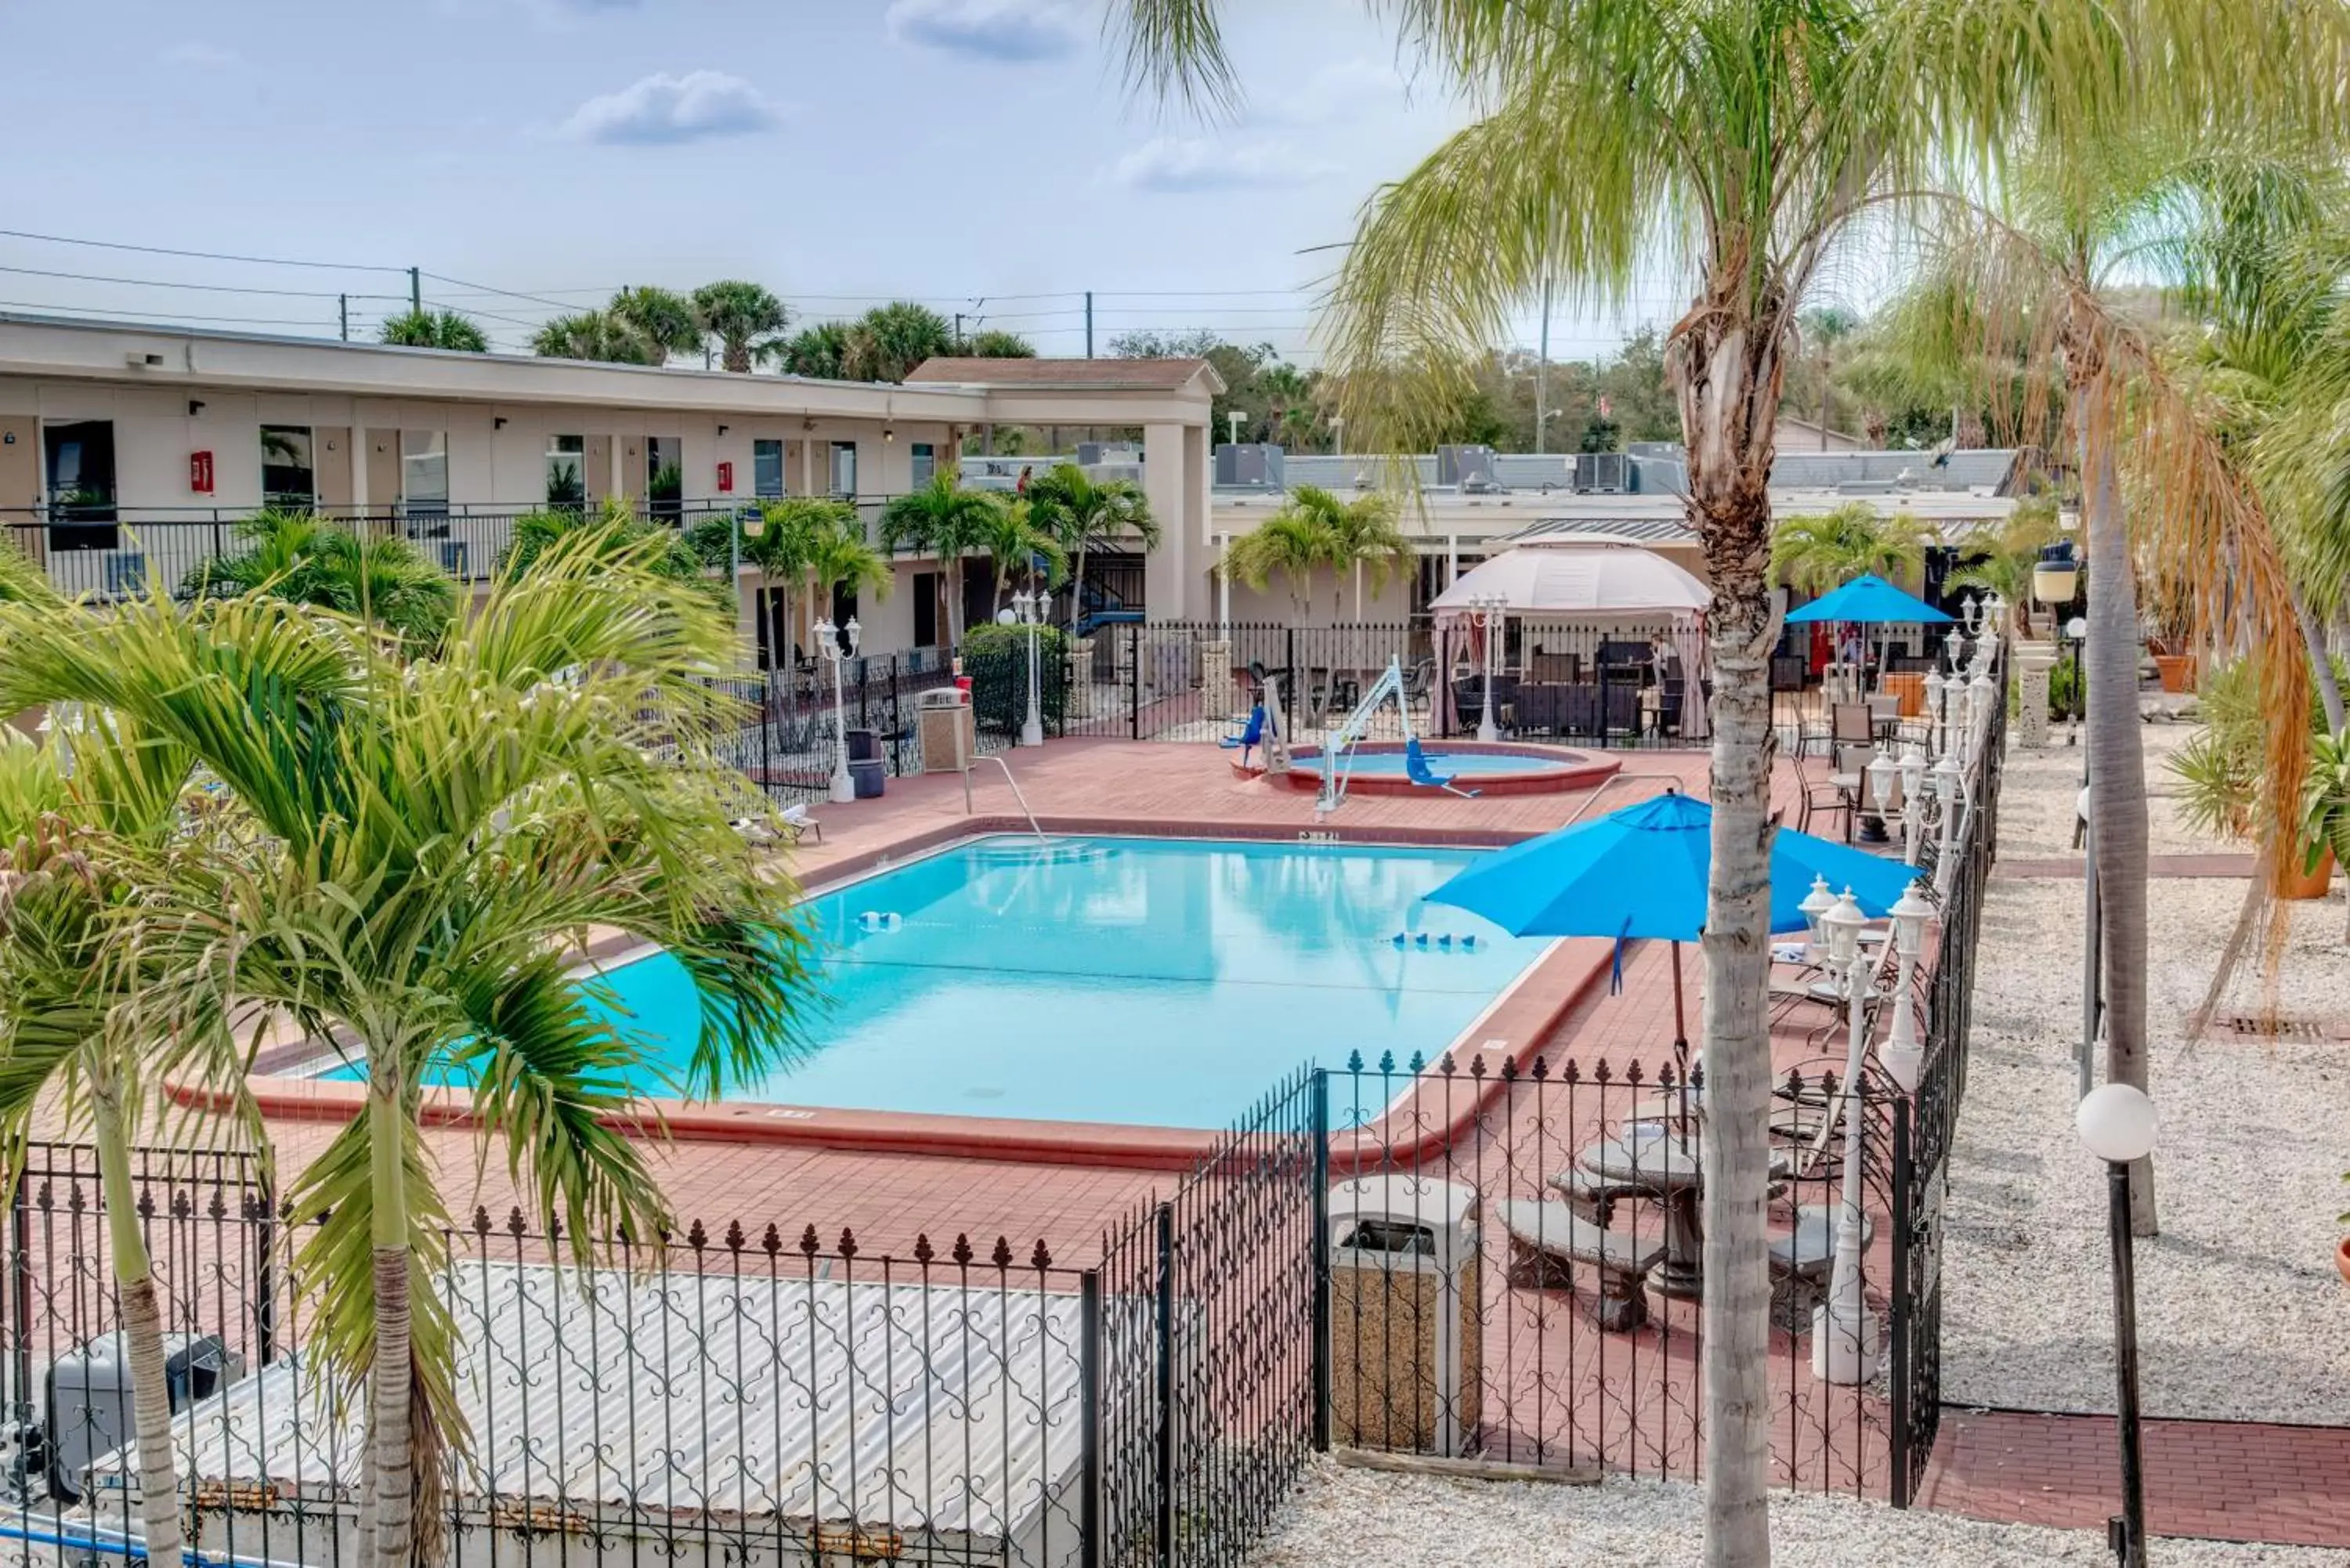 Pool View in Days Inn by Wyndham St. Petersburg / Tampa Bay Area